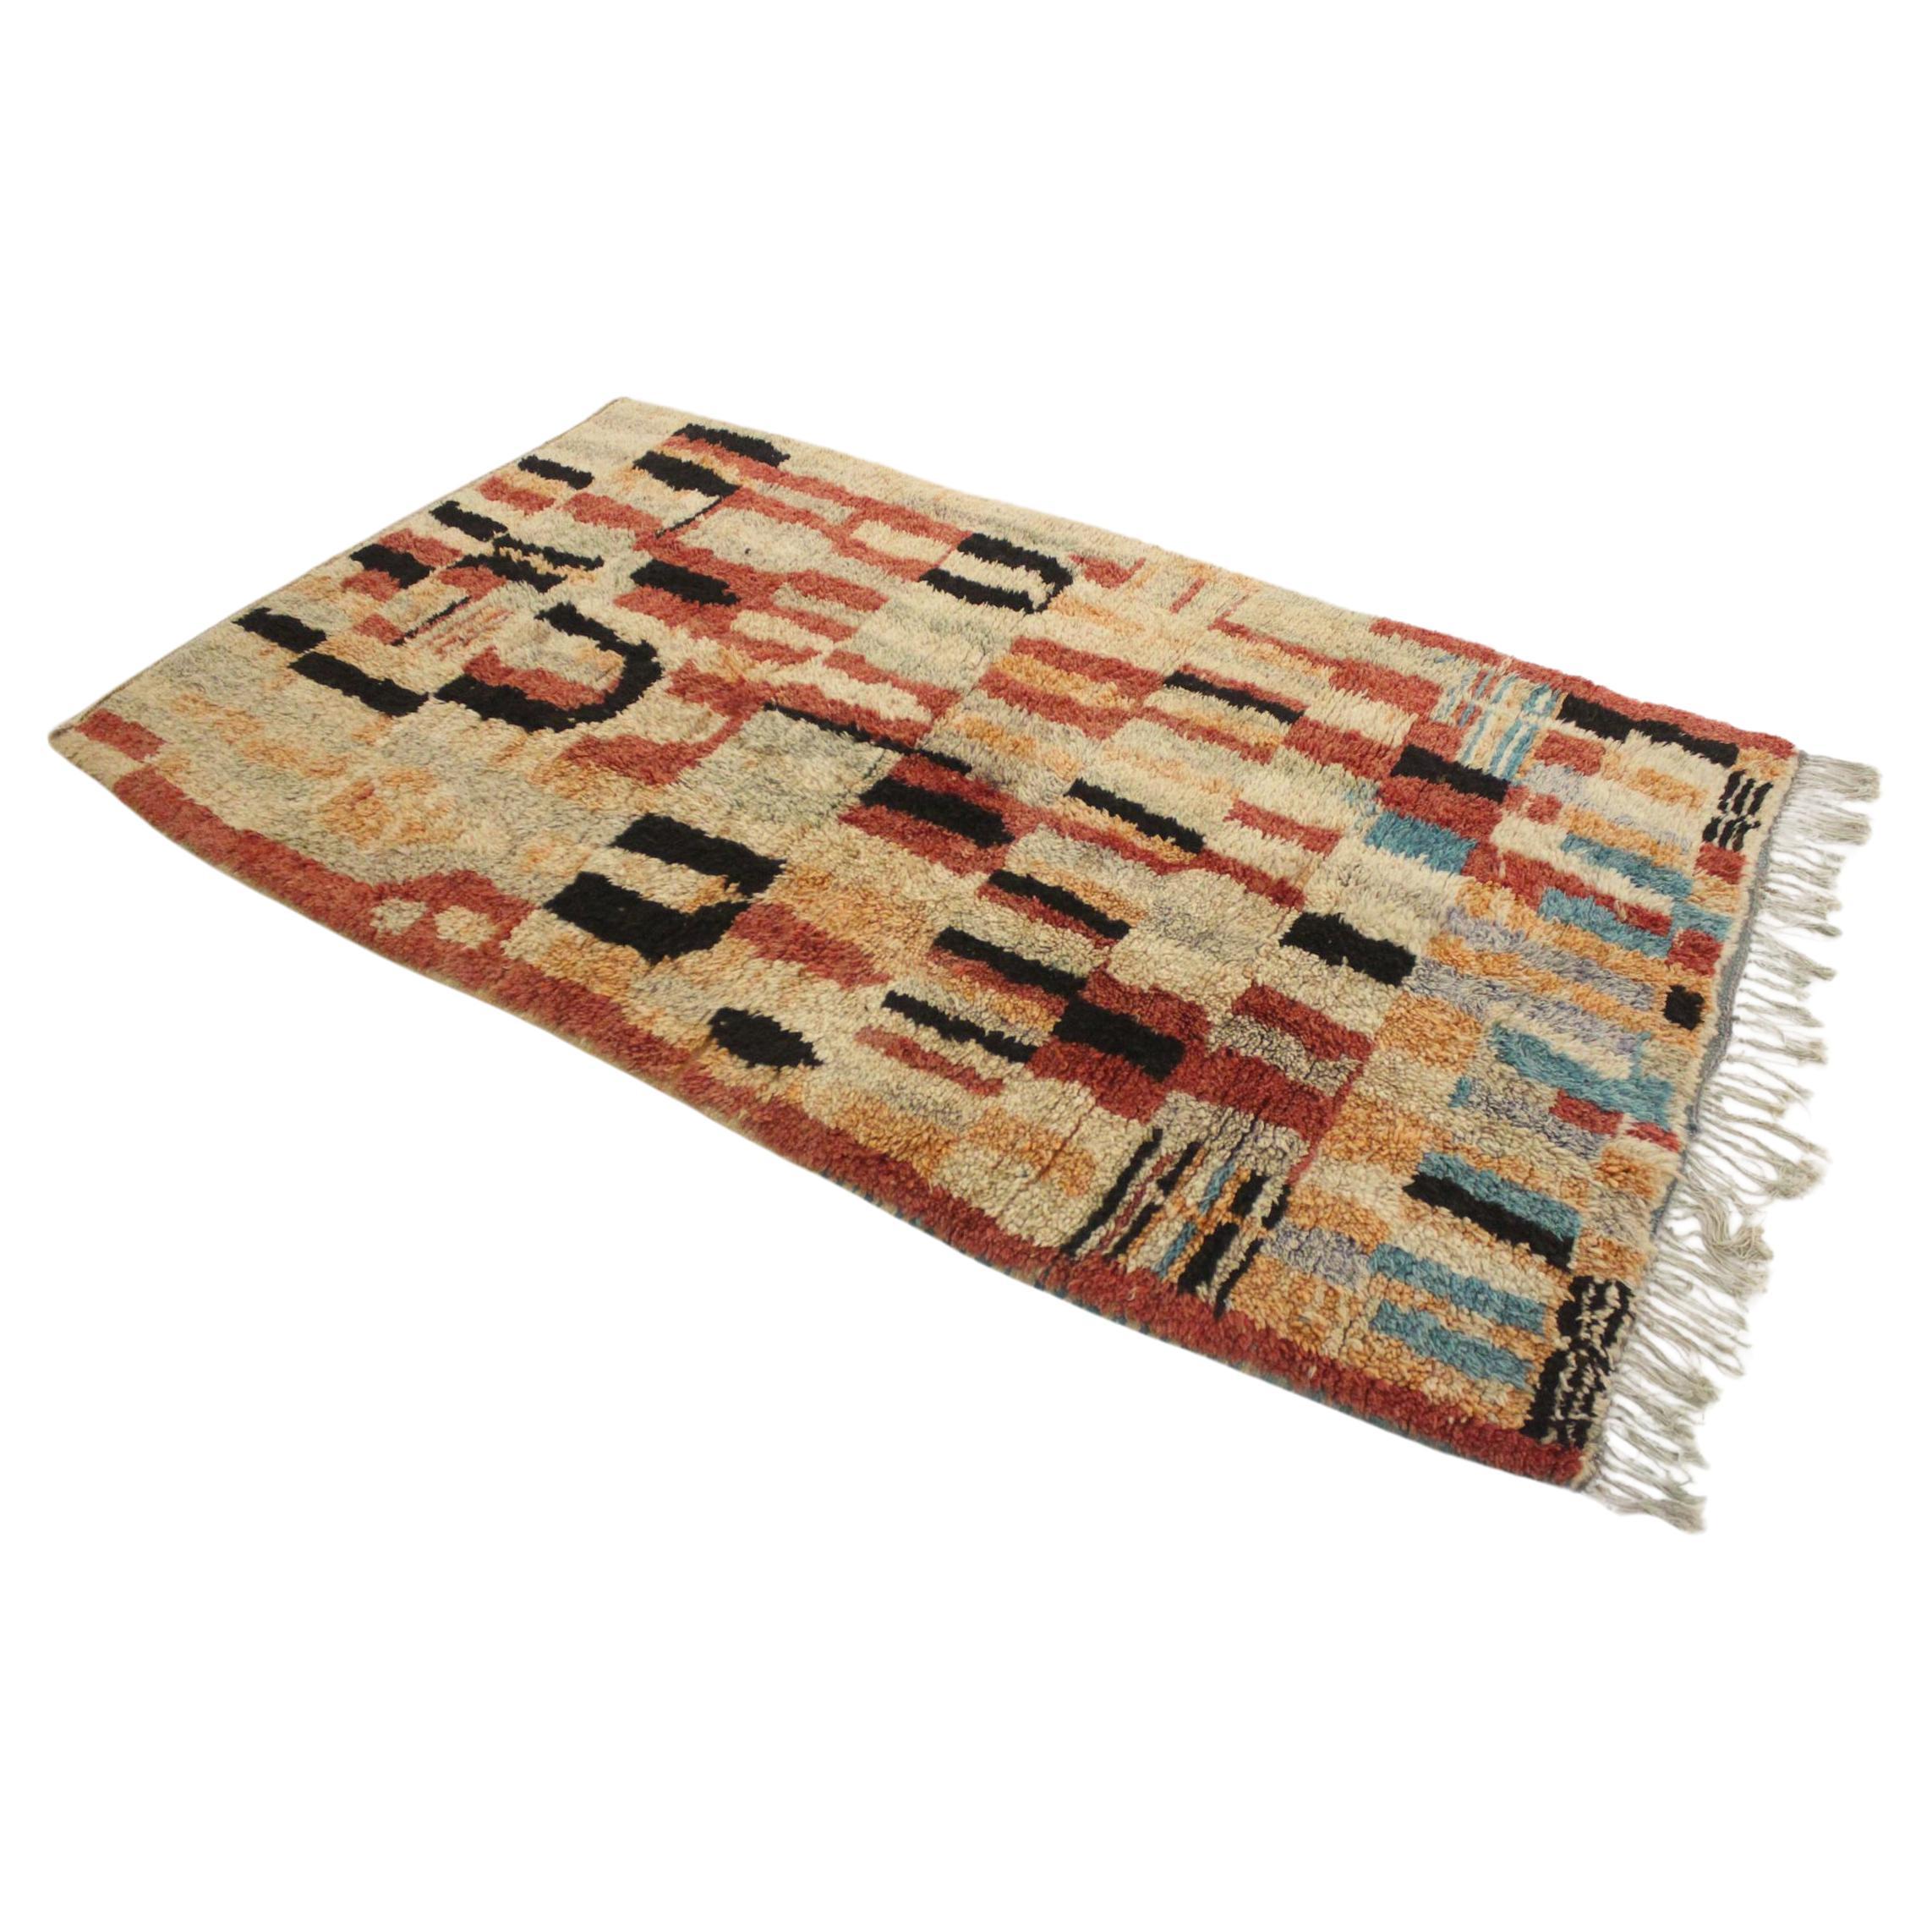 Vintage Moroccan Boujad rug - Terracotta/black - 5x8.6feet / 152x263cm